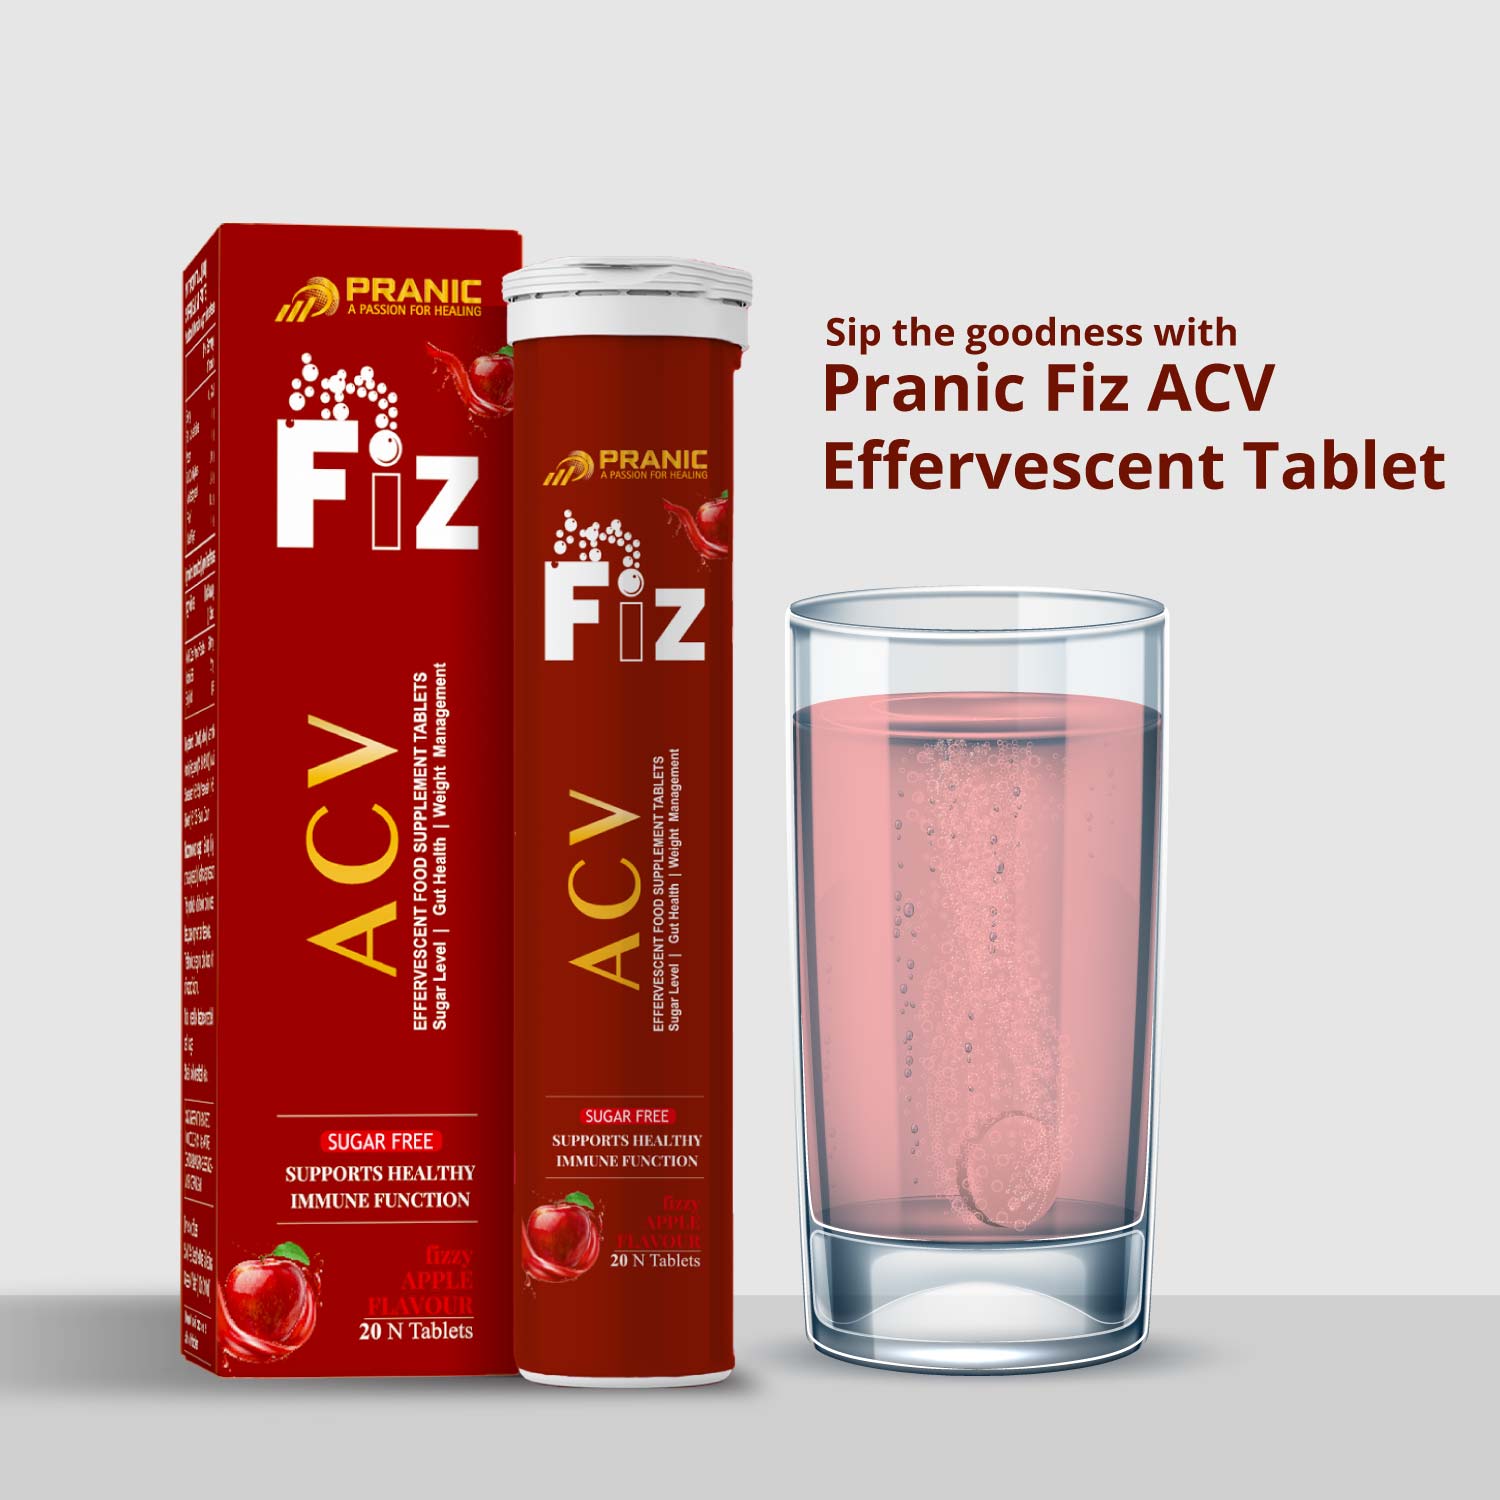 Pranic Fiz ACV Effervescent Tablet